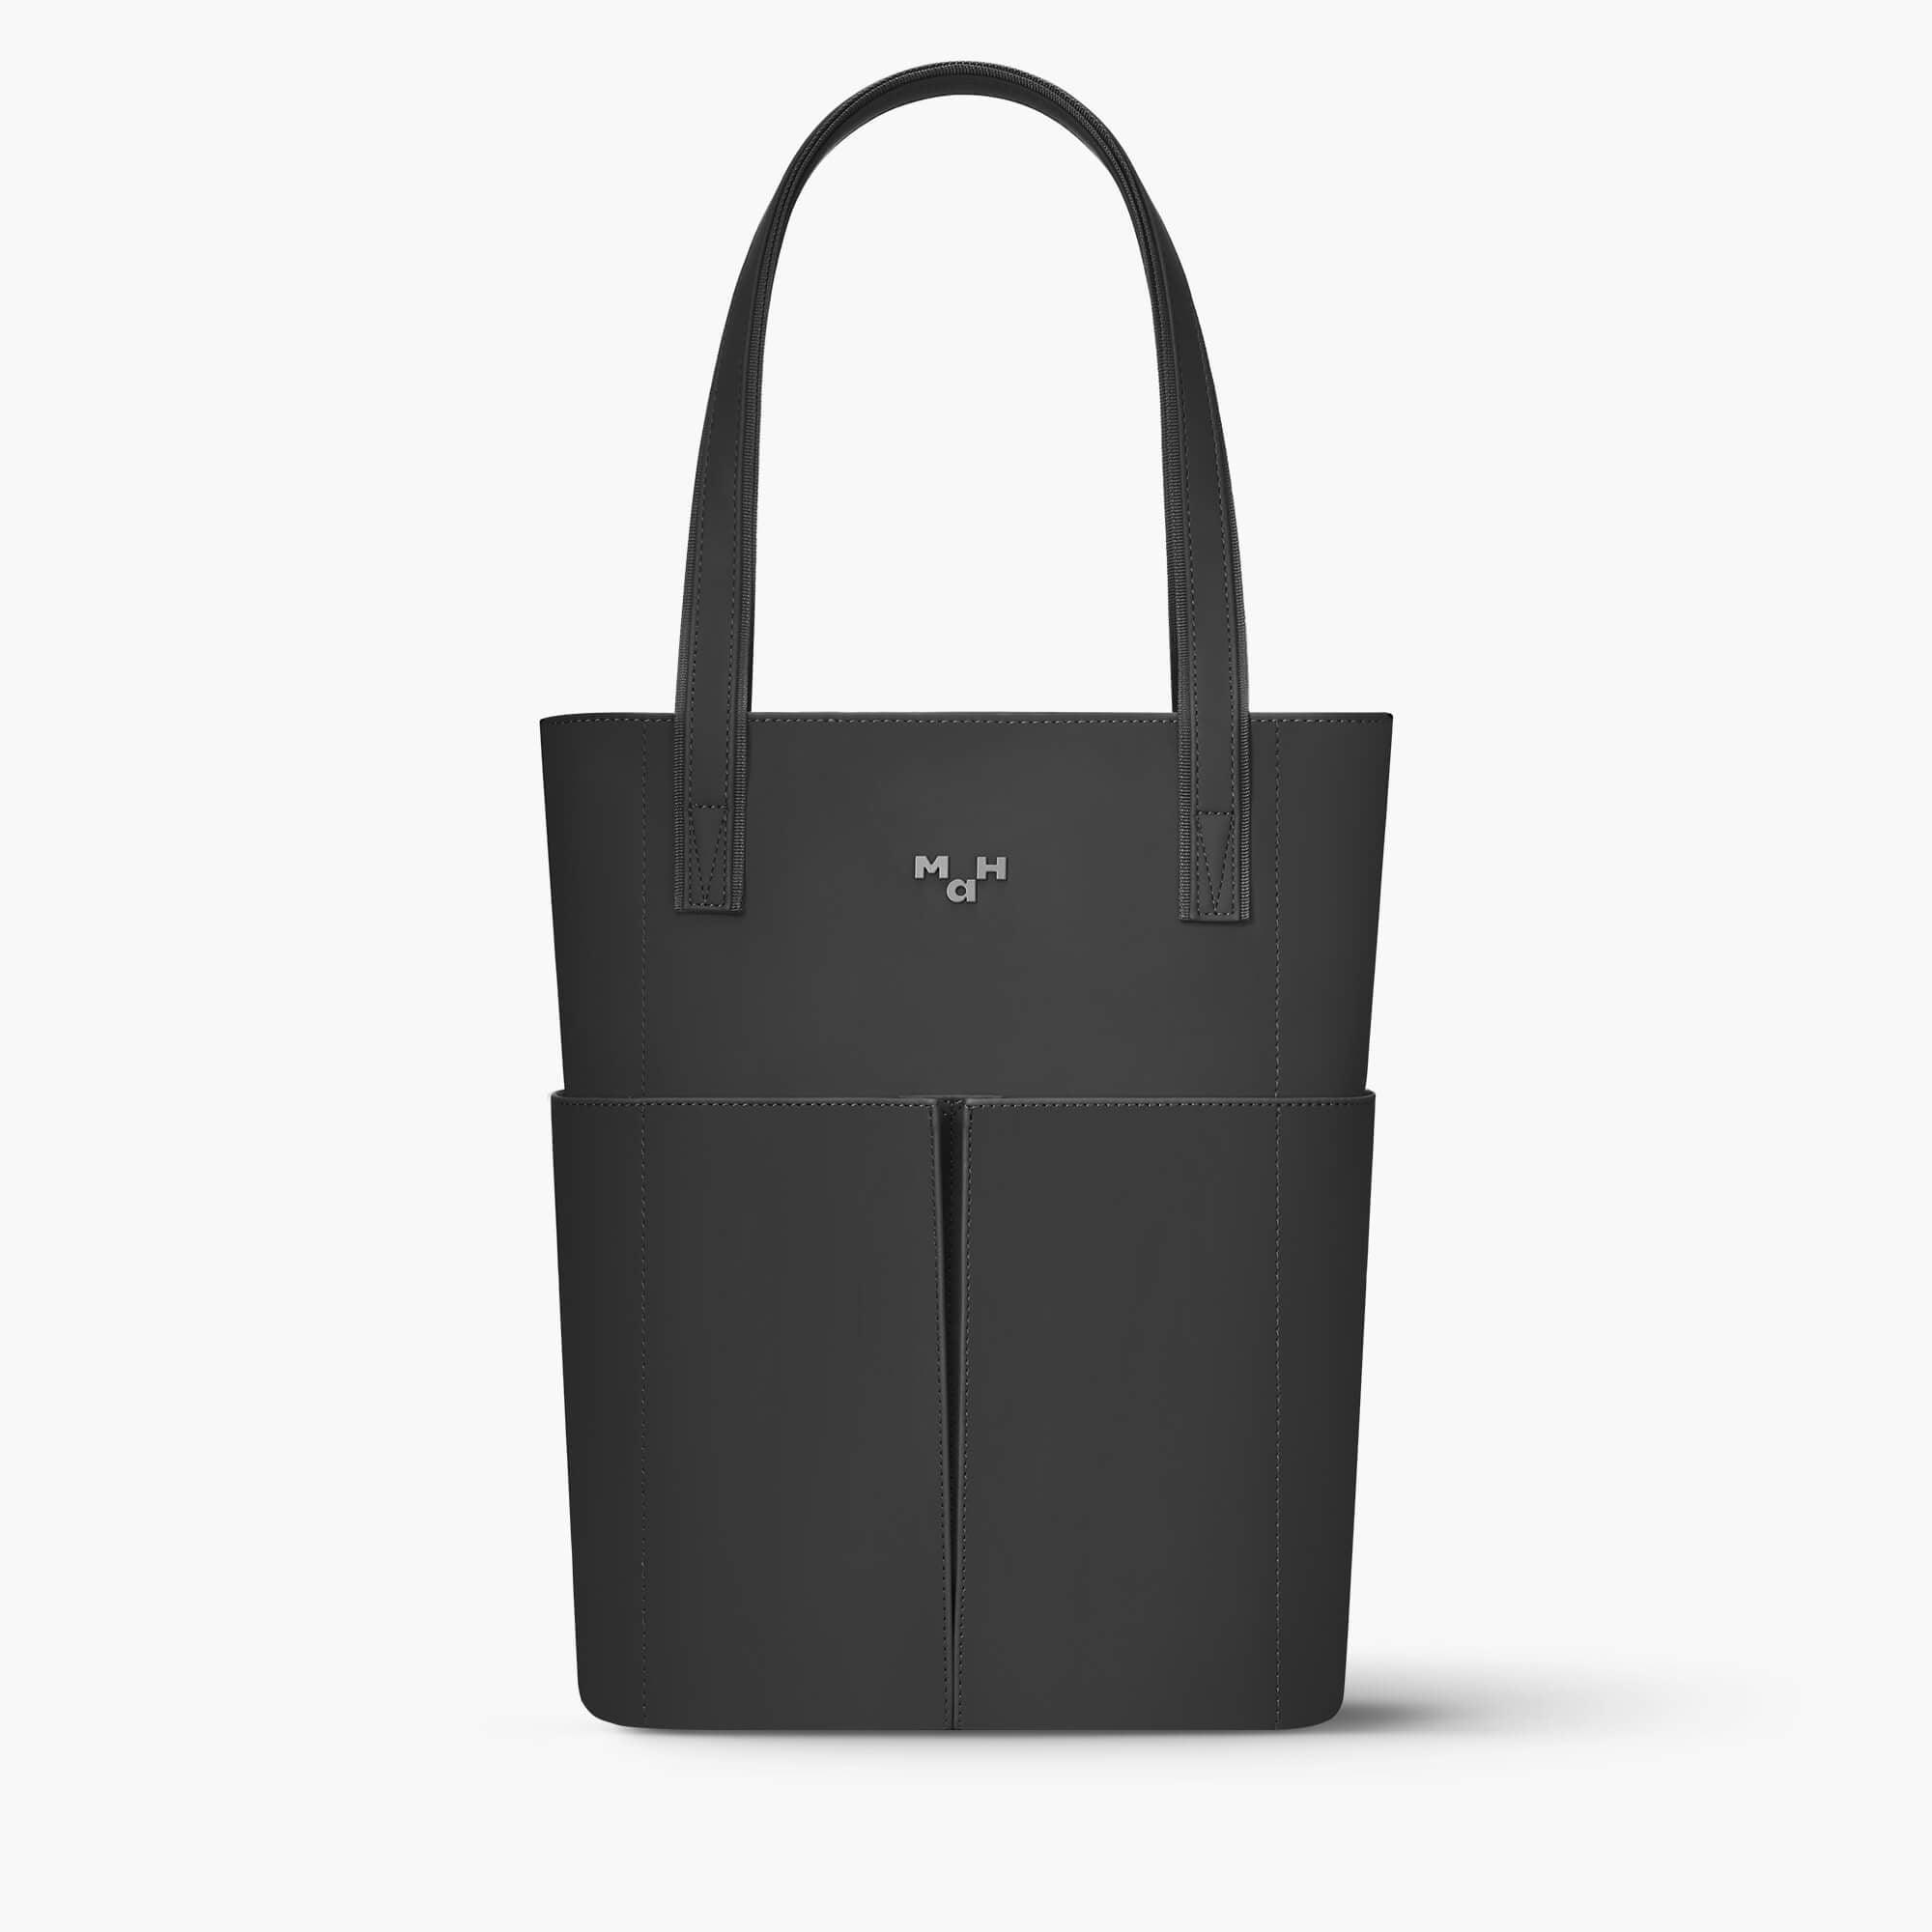 PU Leather Tote Bag - Black